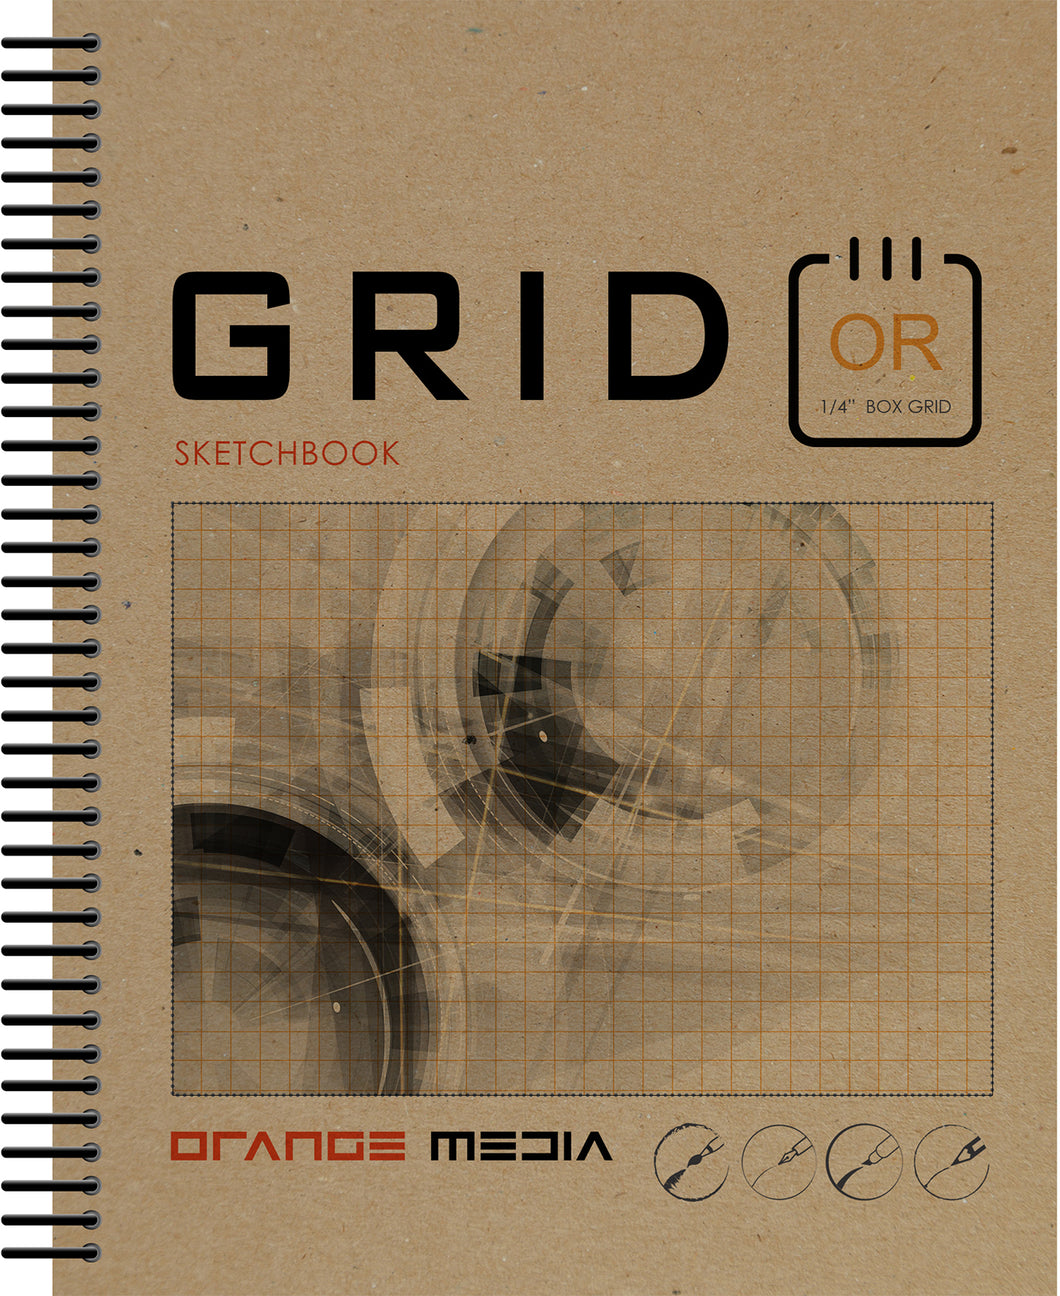 GRID Sketchbook. Spiral Bound. Journal Style. Multi-Media. (8.5